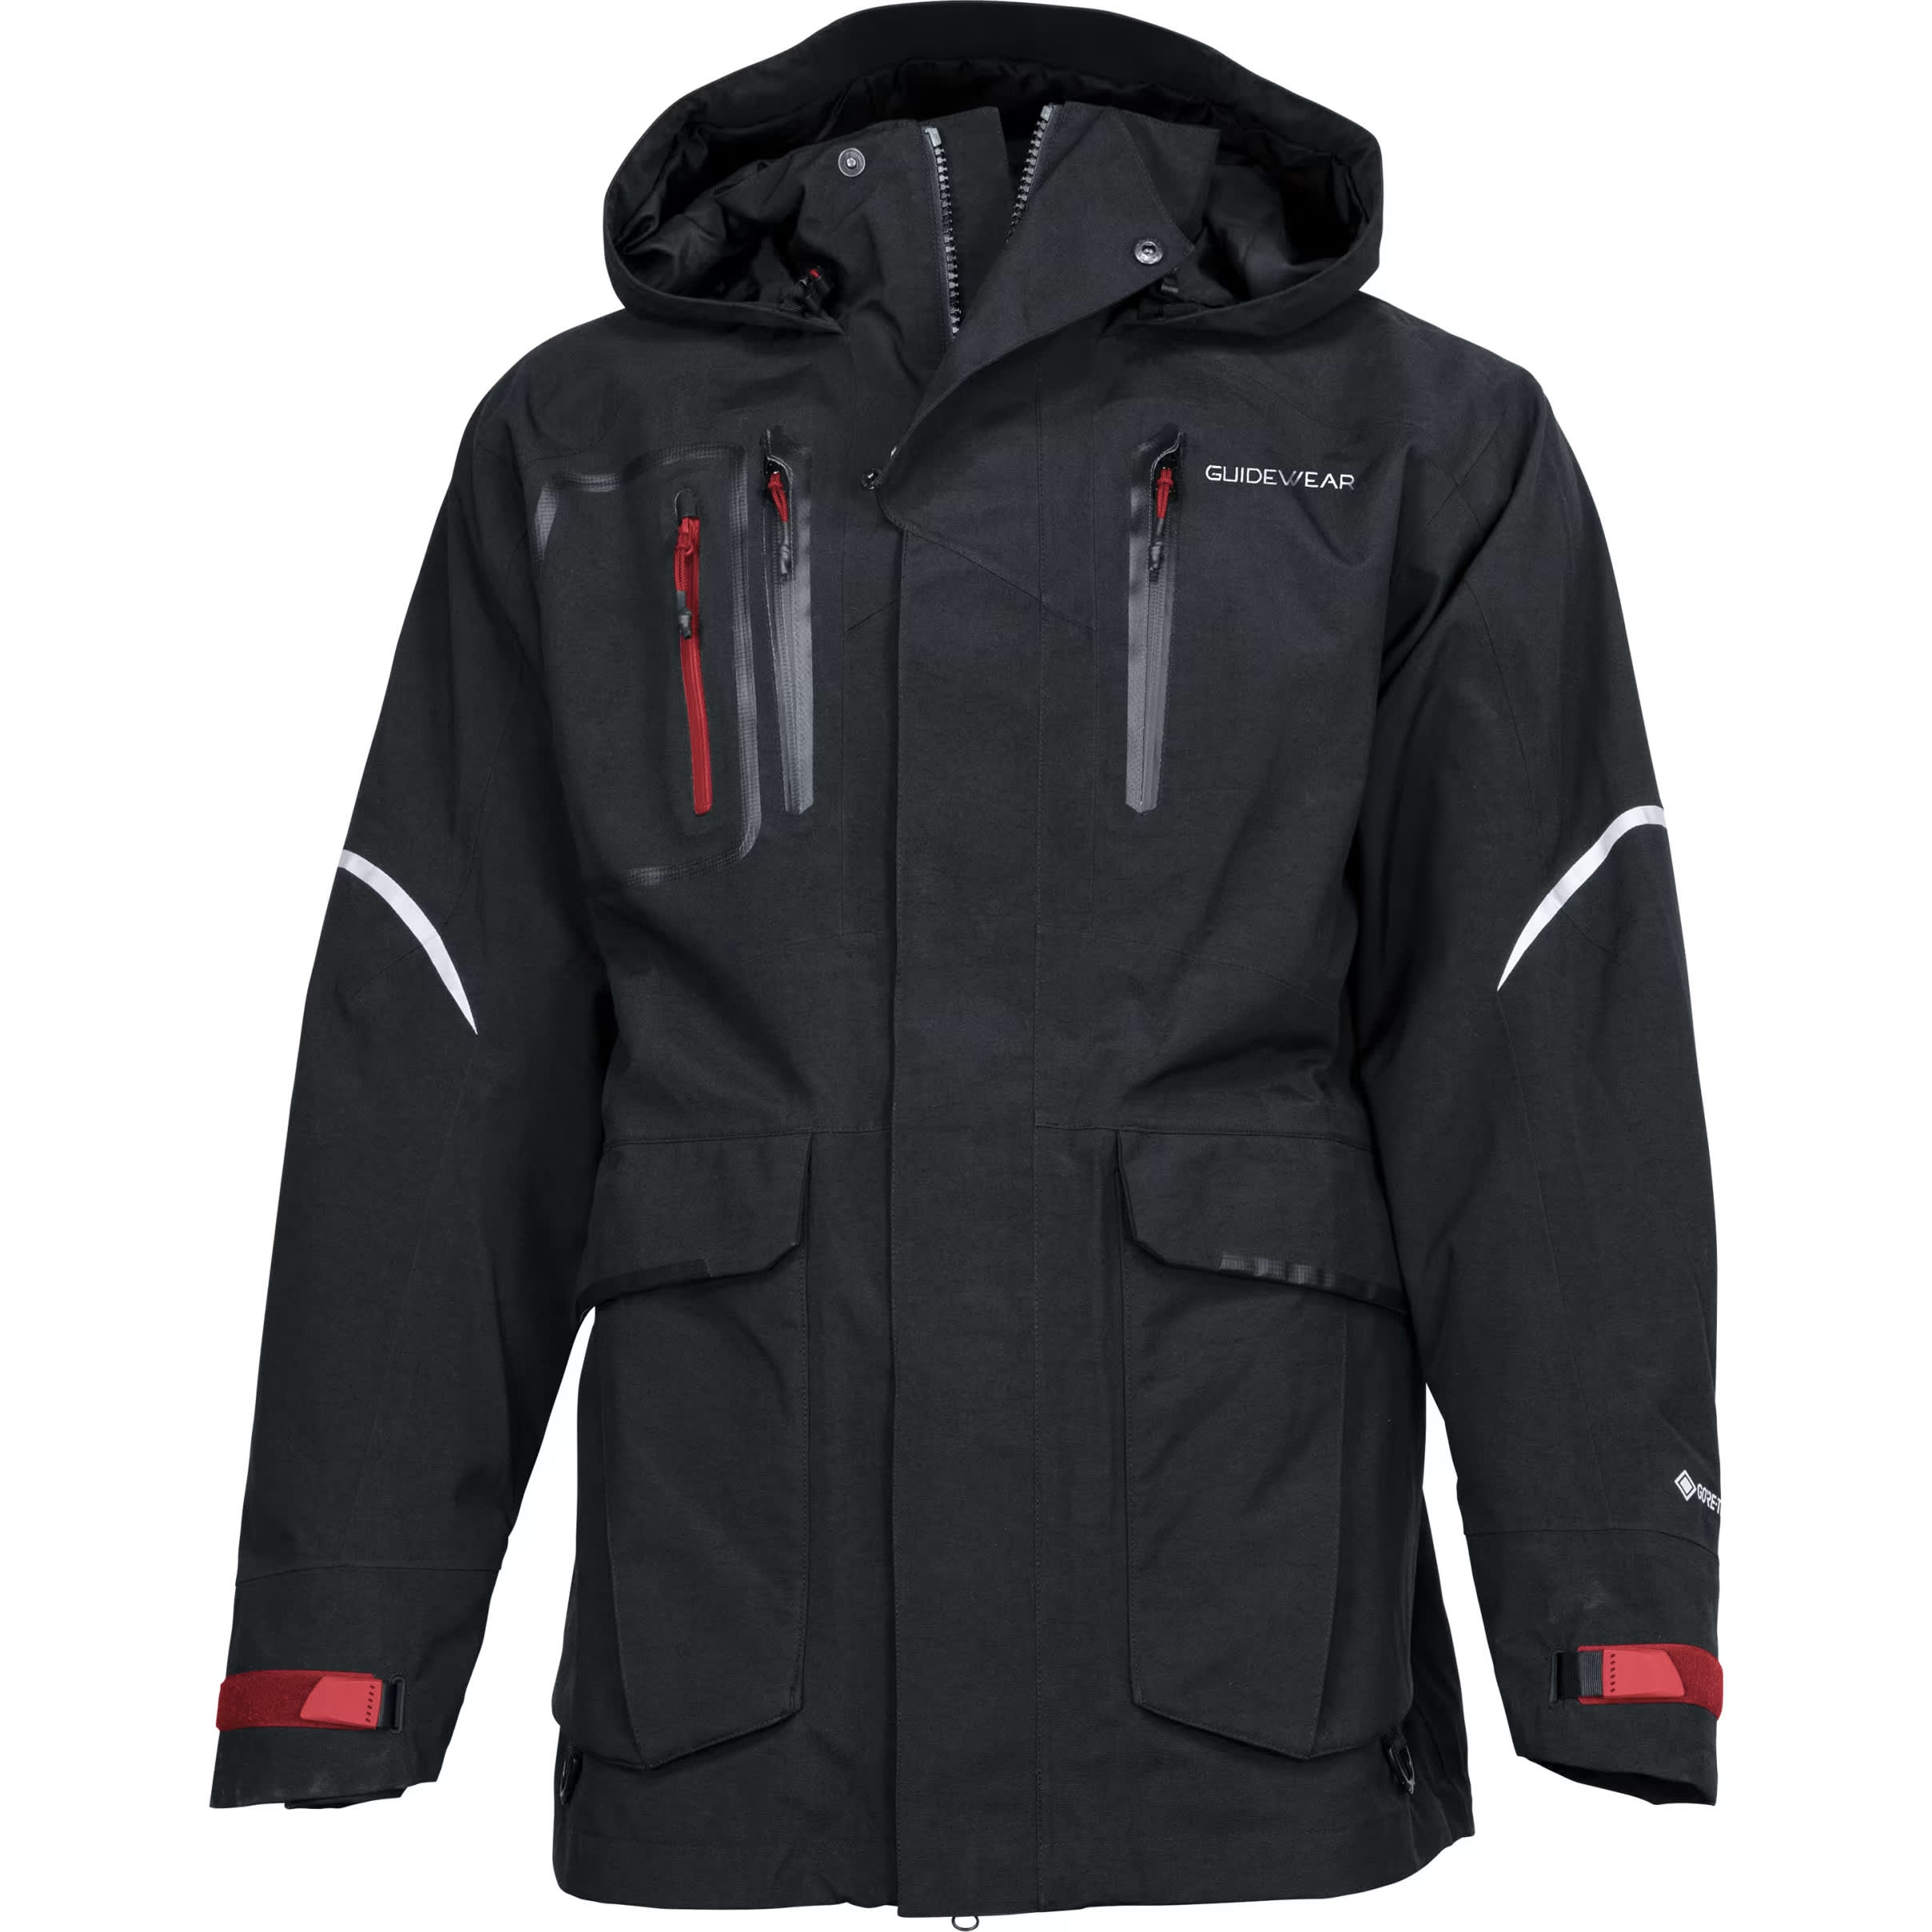 Guidewear Men's Xtreme Jacket with GORE-TEX - Cabelas - GUIDEWEAR 